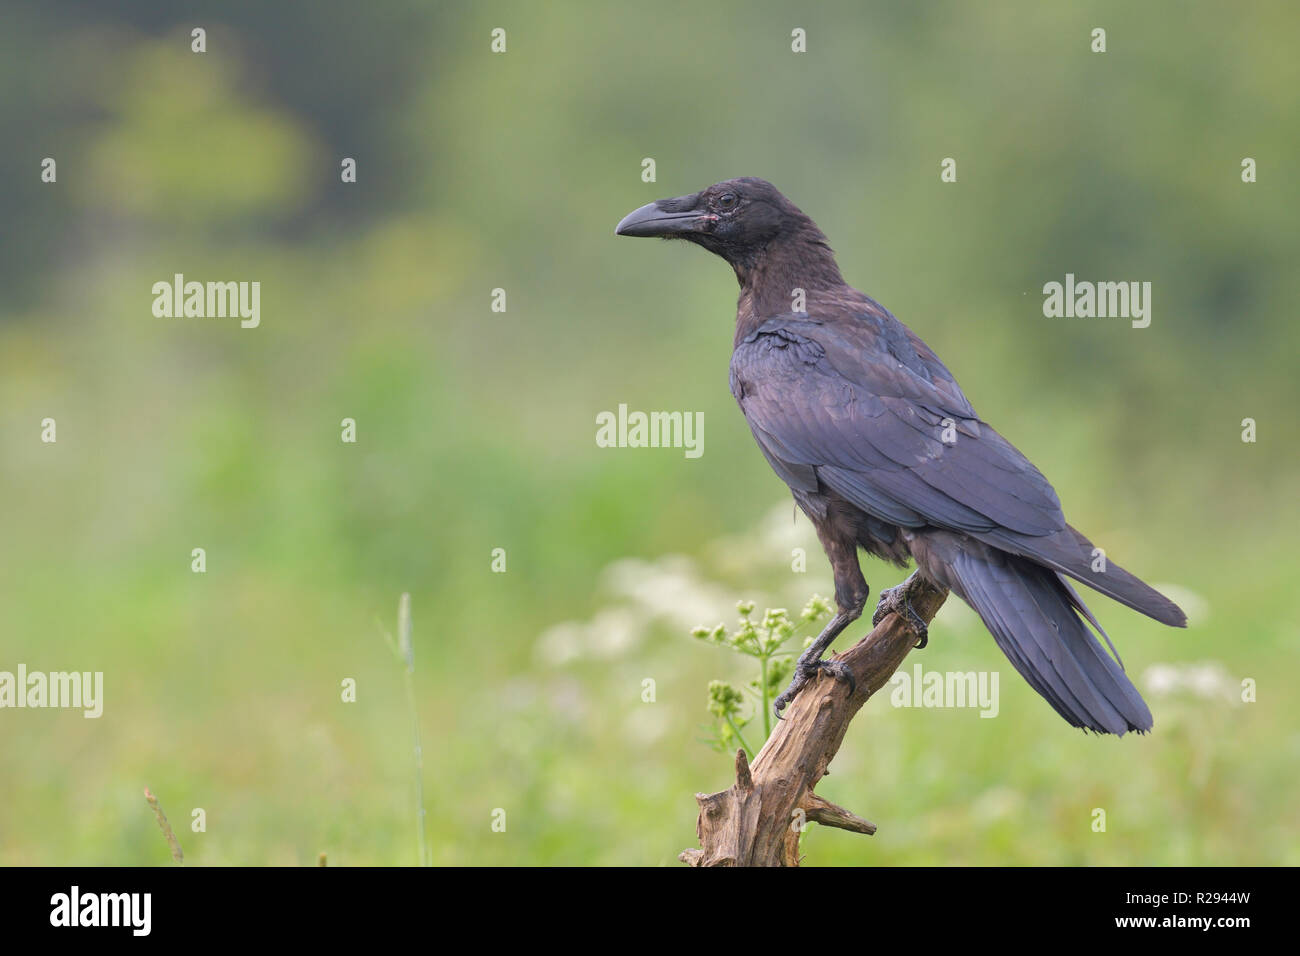 Common raven (Corvus corax) on tree stump, Tyrol, Austria Stock Photo